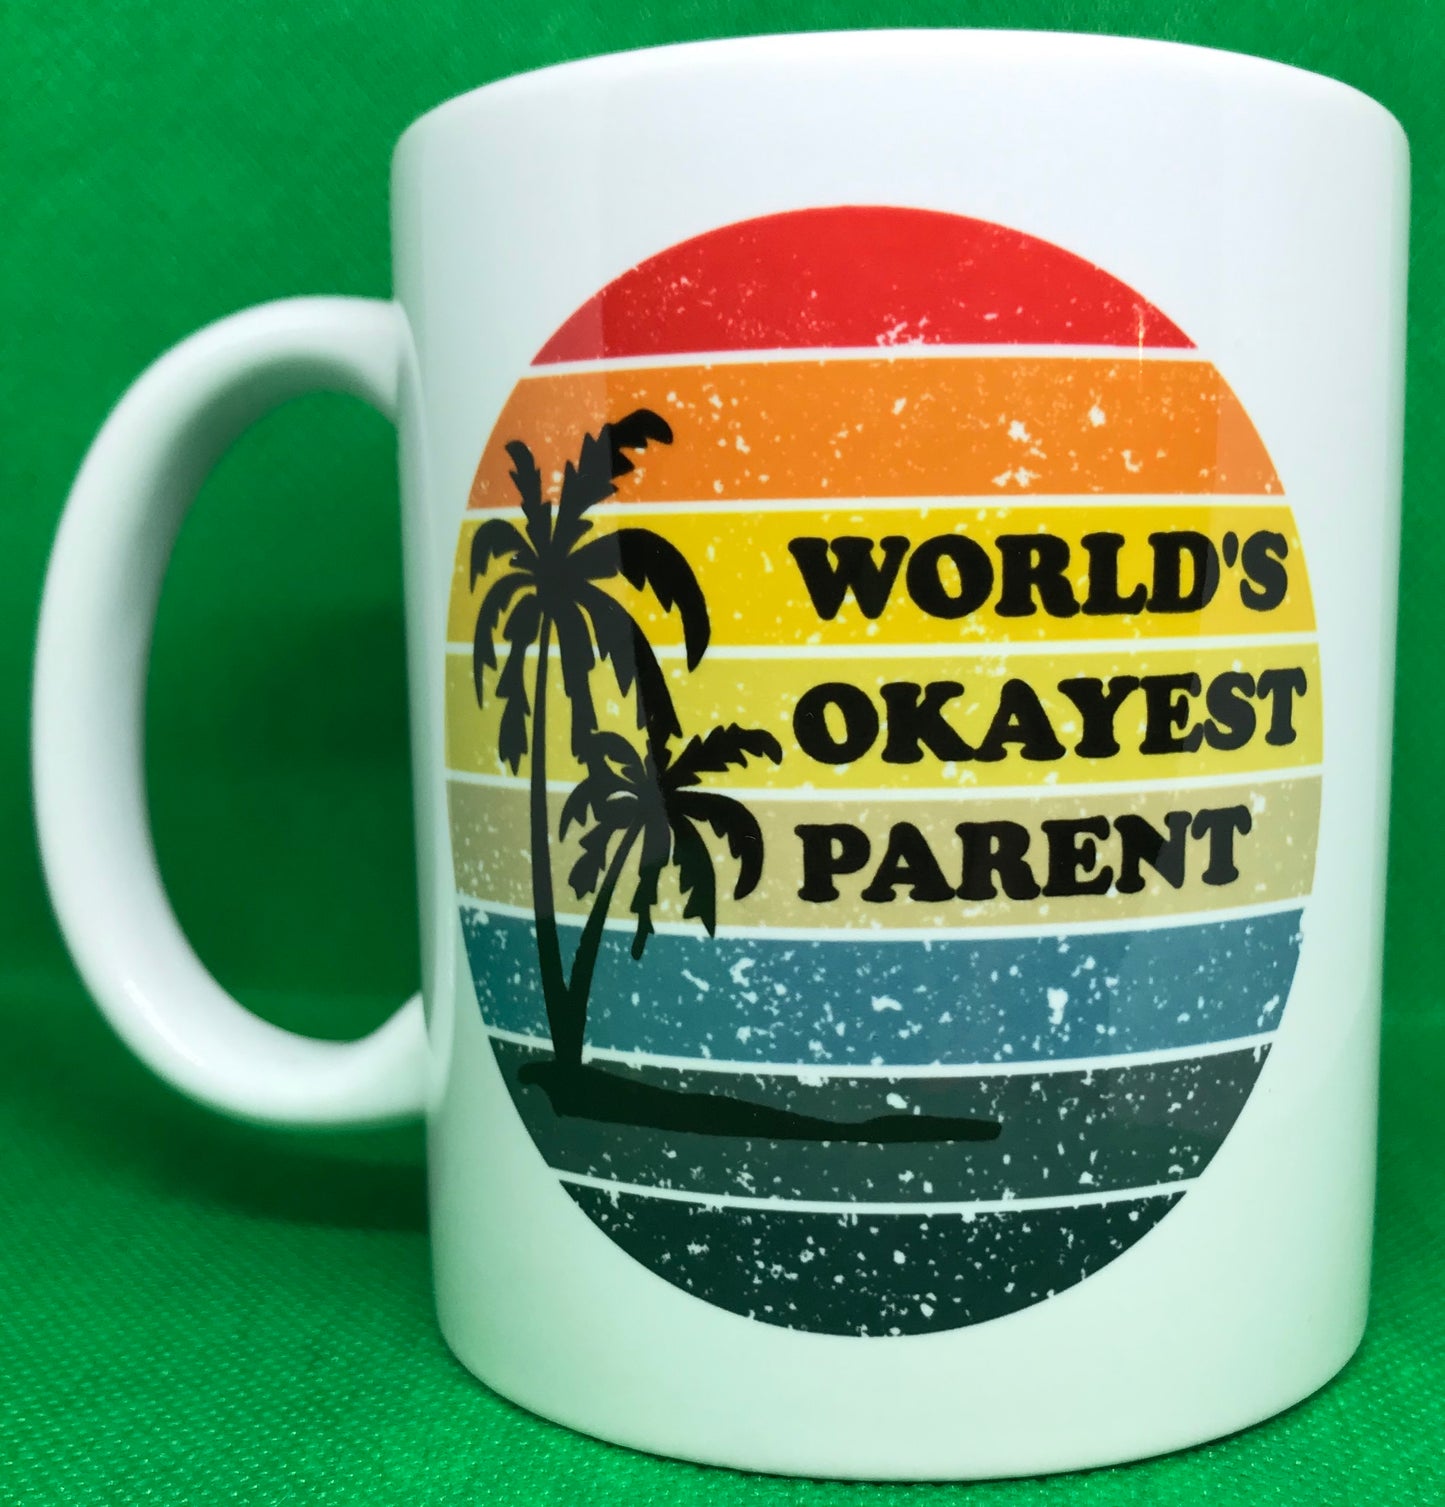 World's Okayest Parent mug